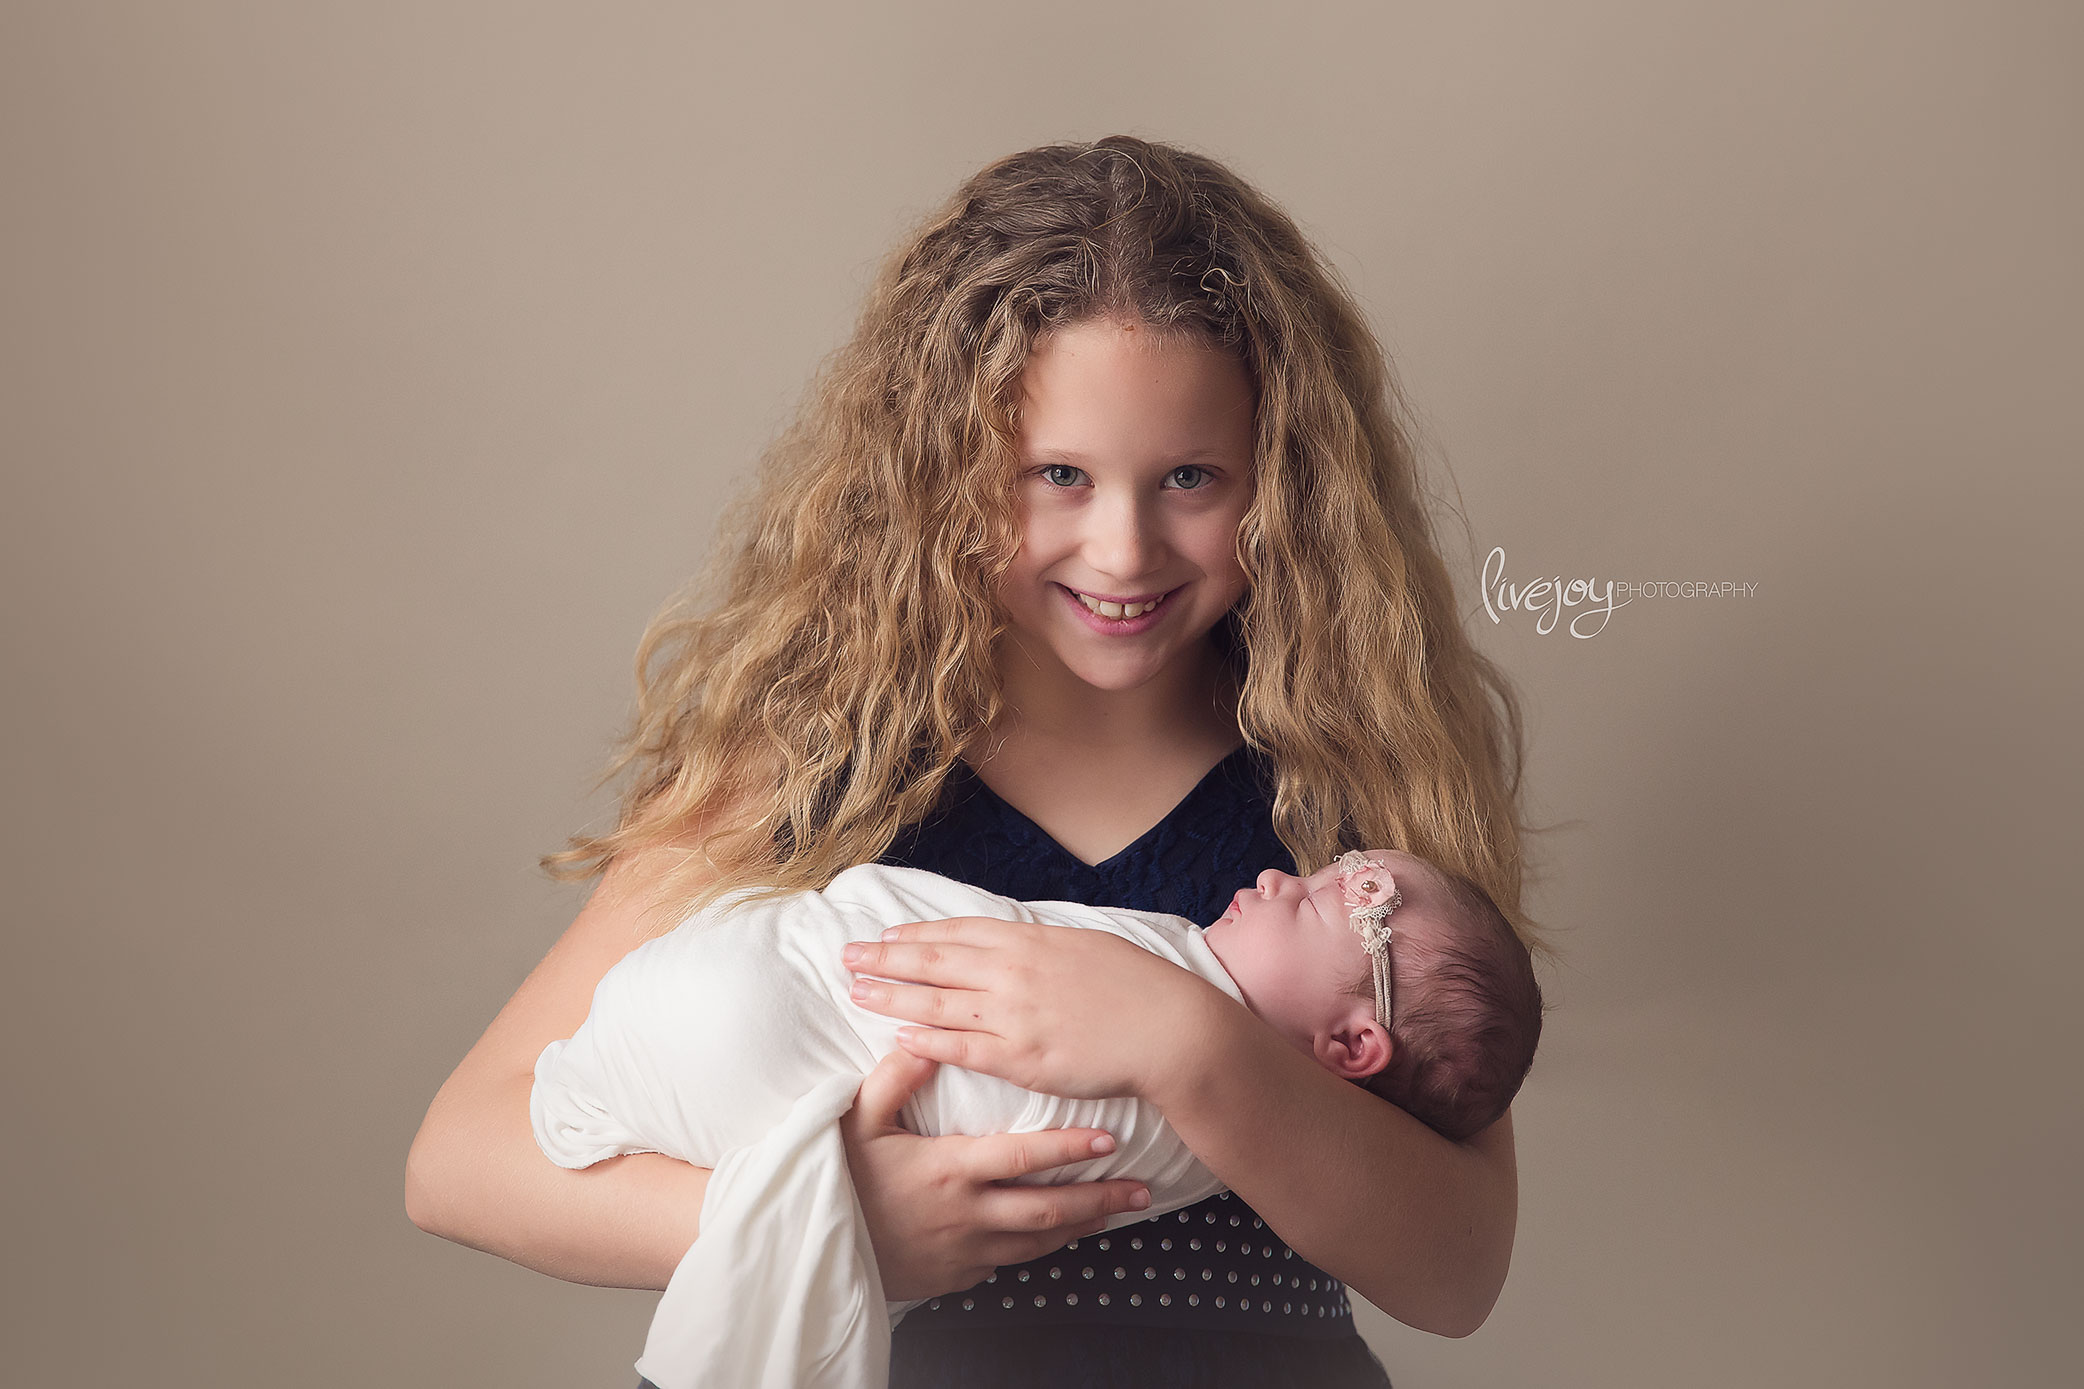 Sibling Newborn Photography | Oregon | LiveJoy Photography